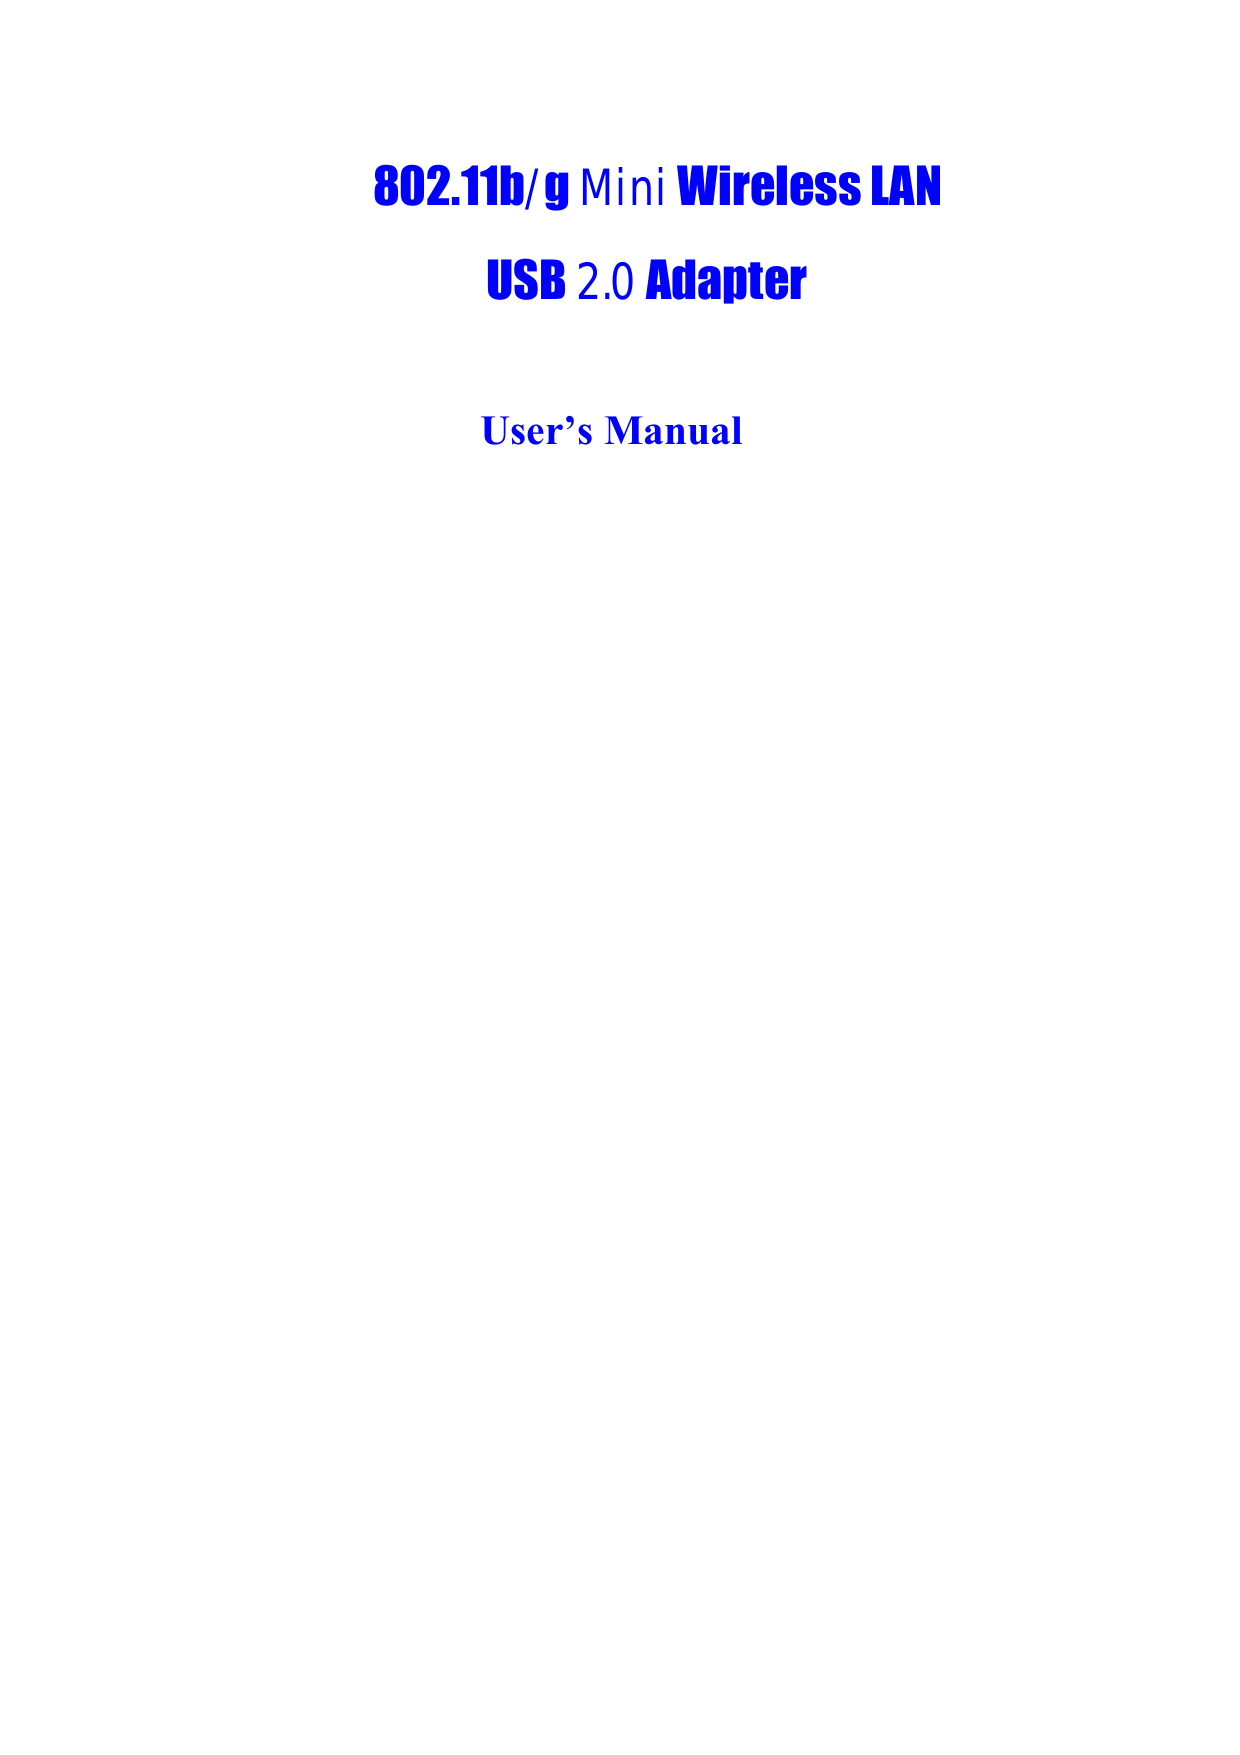   802.11b/g Mini Wireless LAN USB 2.0 Adapter  User’s Manual 